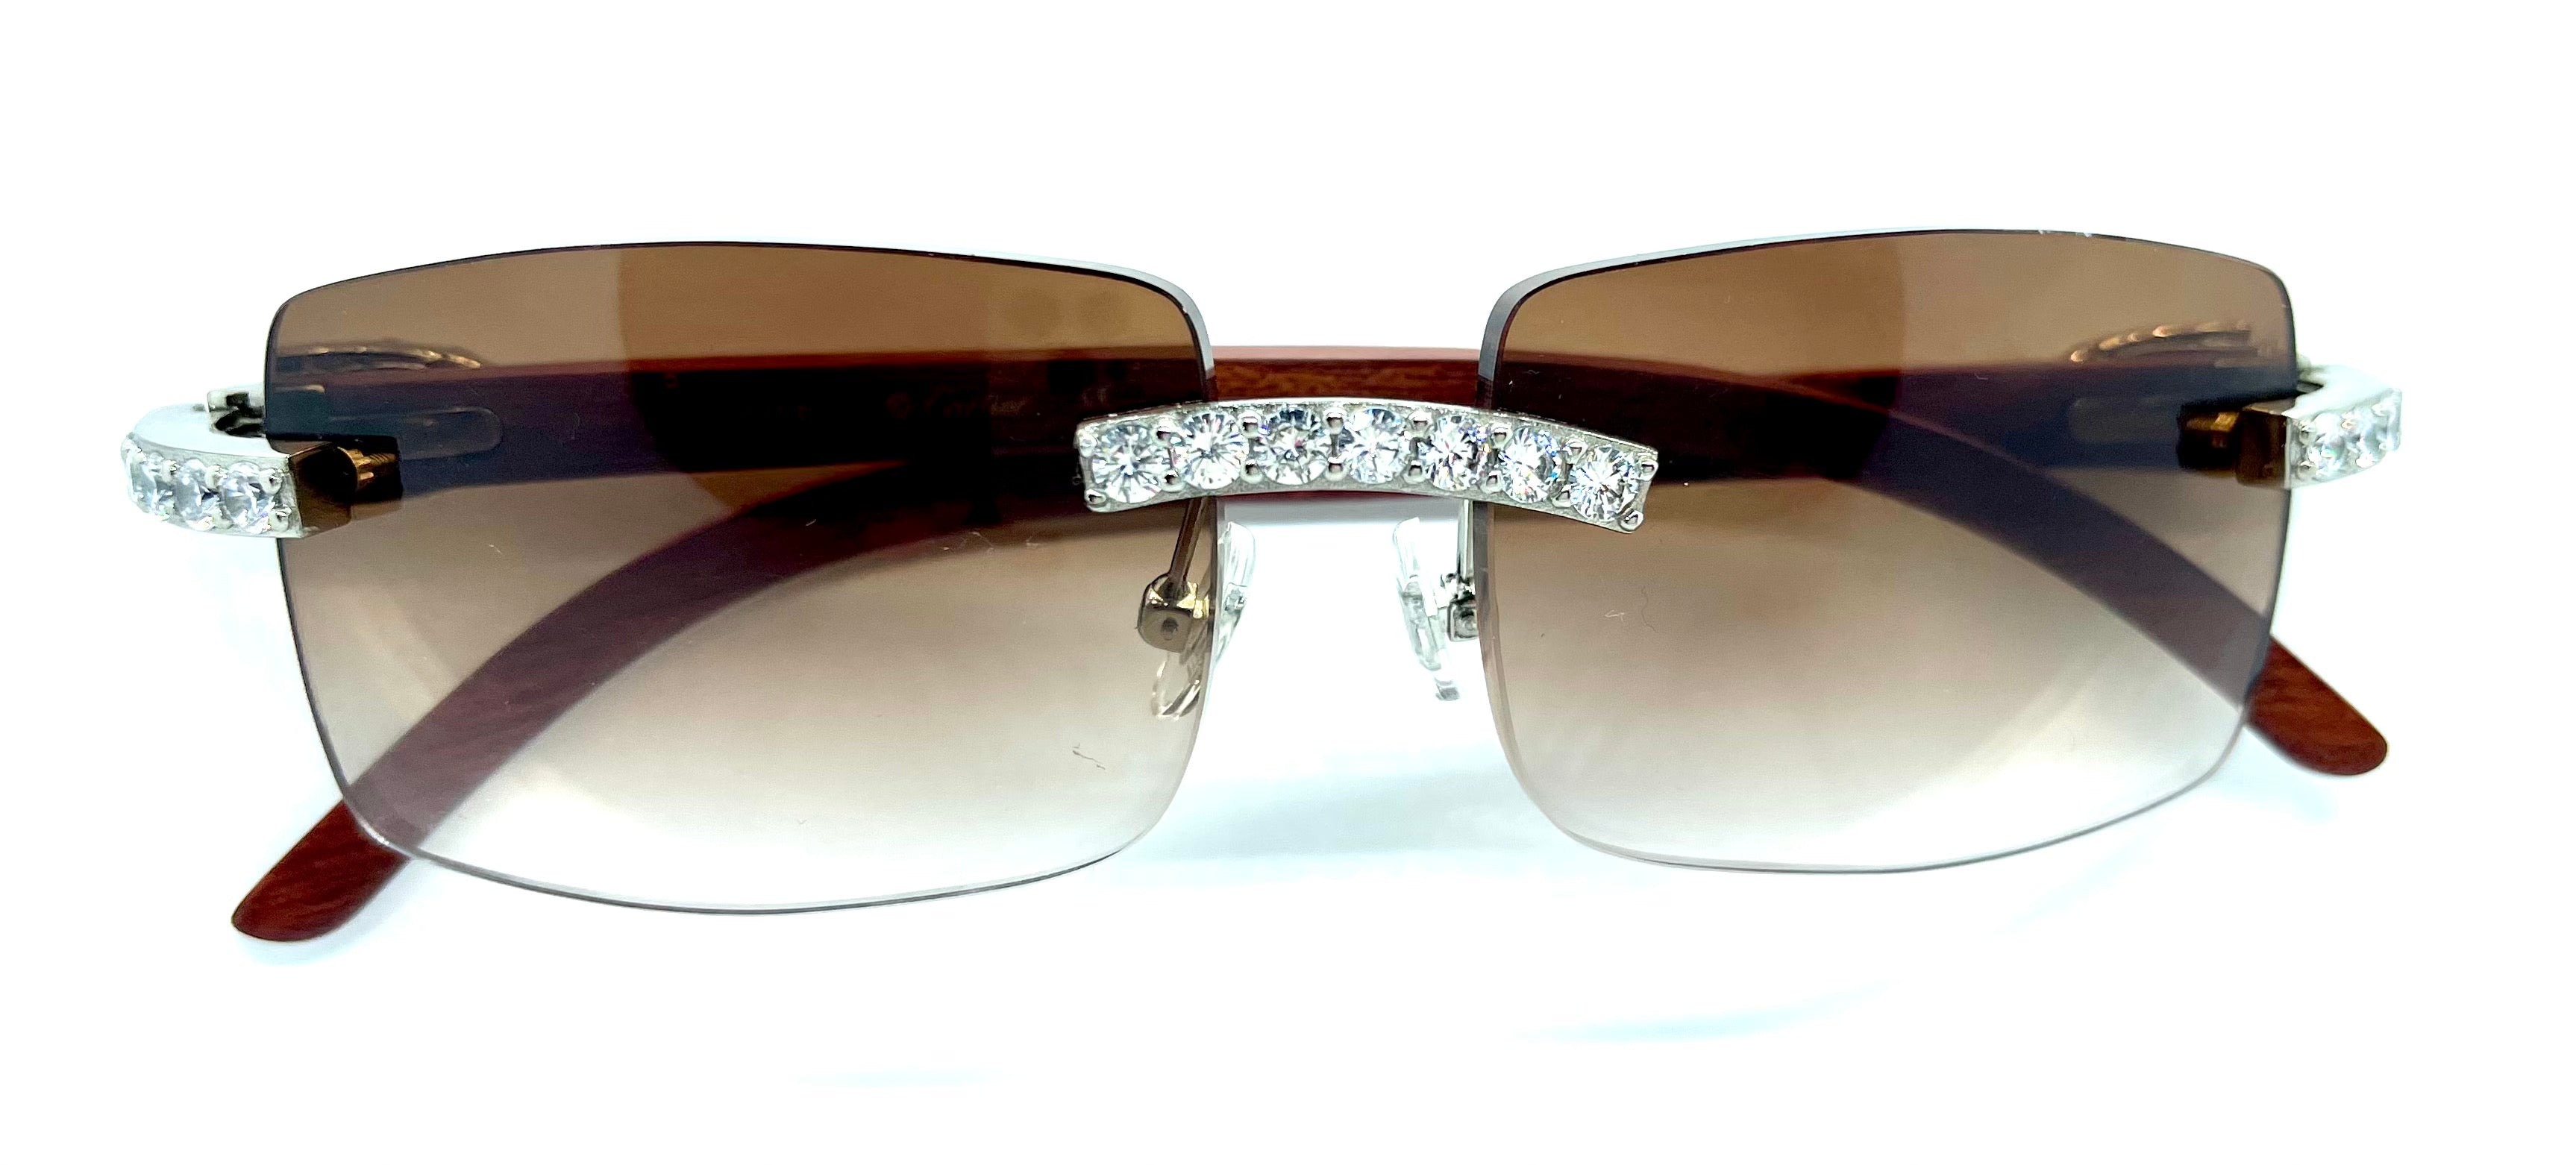 Decor C bubinga wood sunglasses #10 lenses 5pc .20 pointers